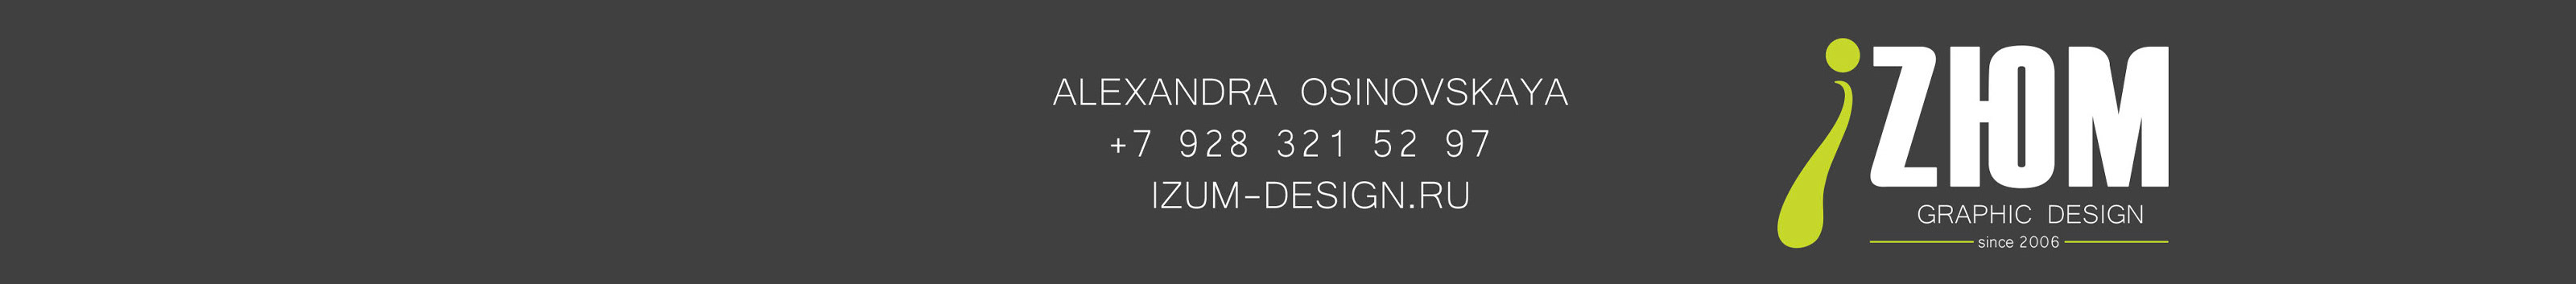 Alexandra Osinovskaya's profile banner